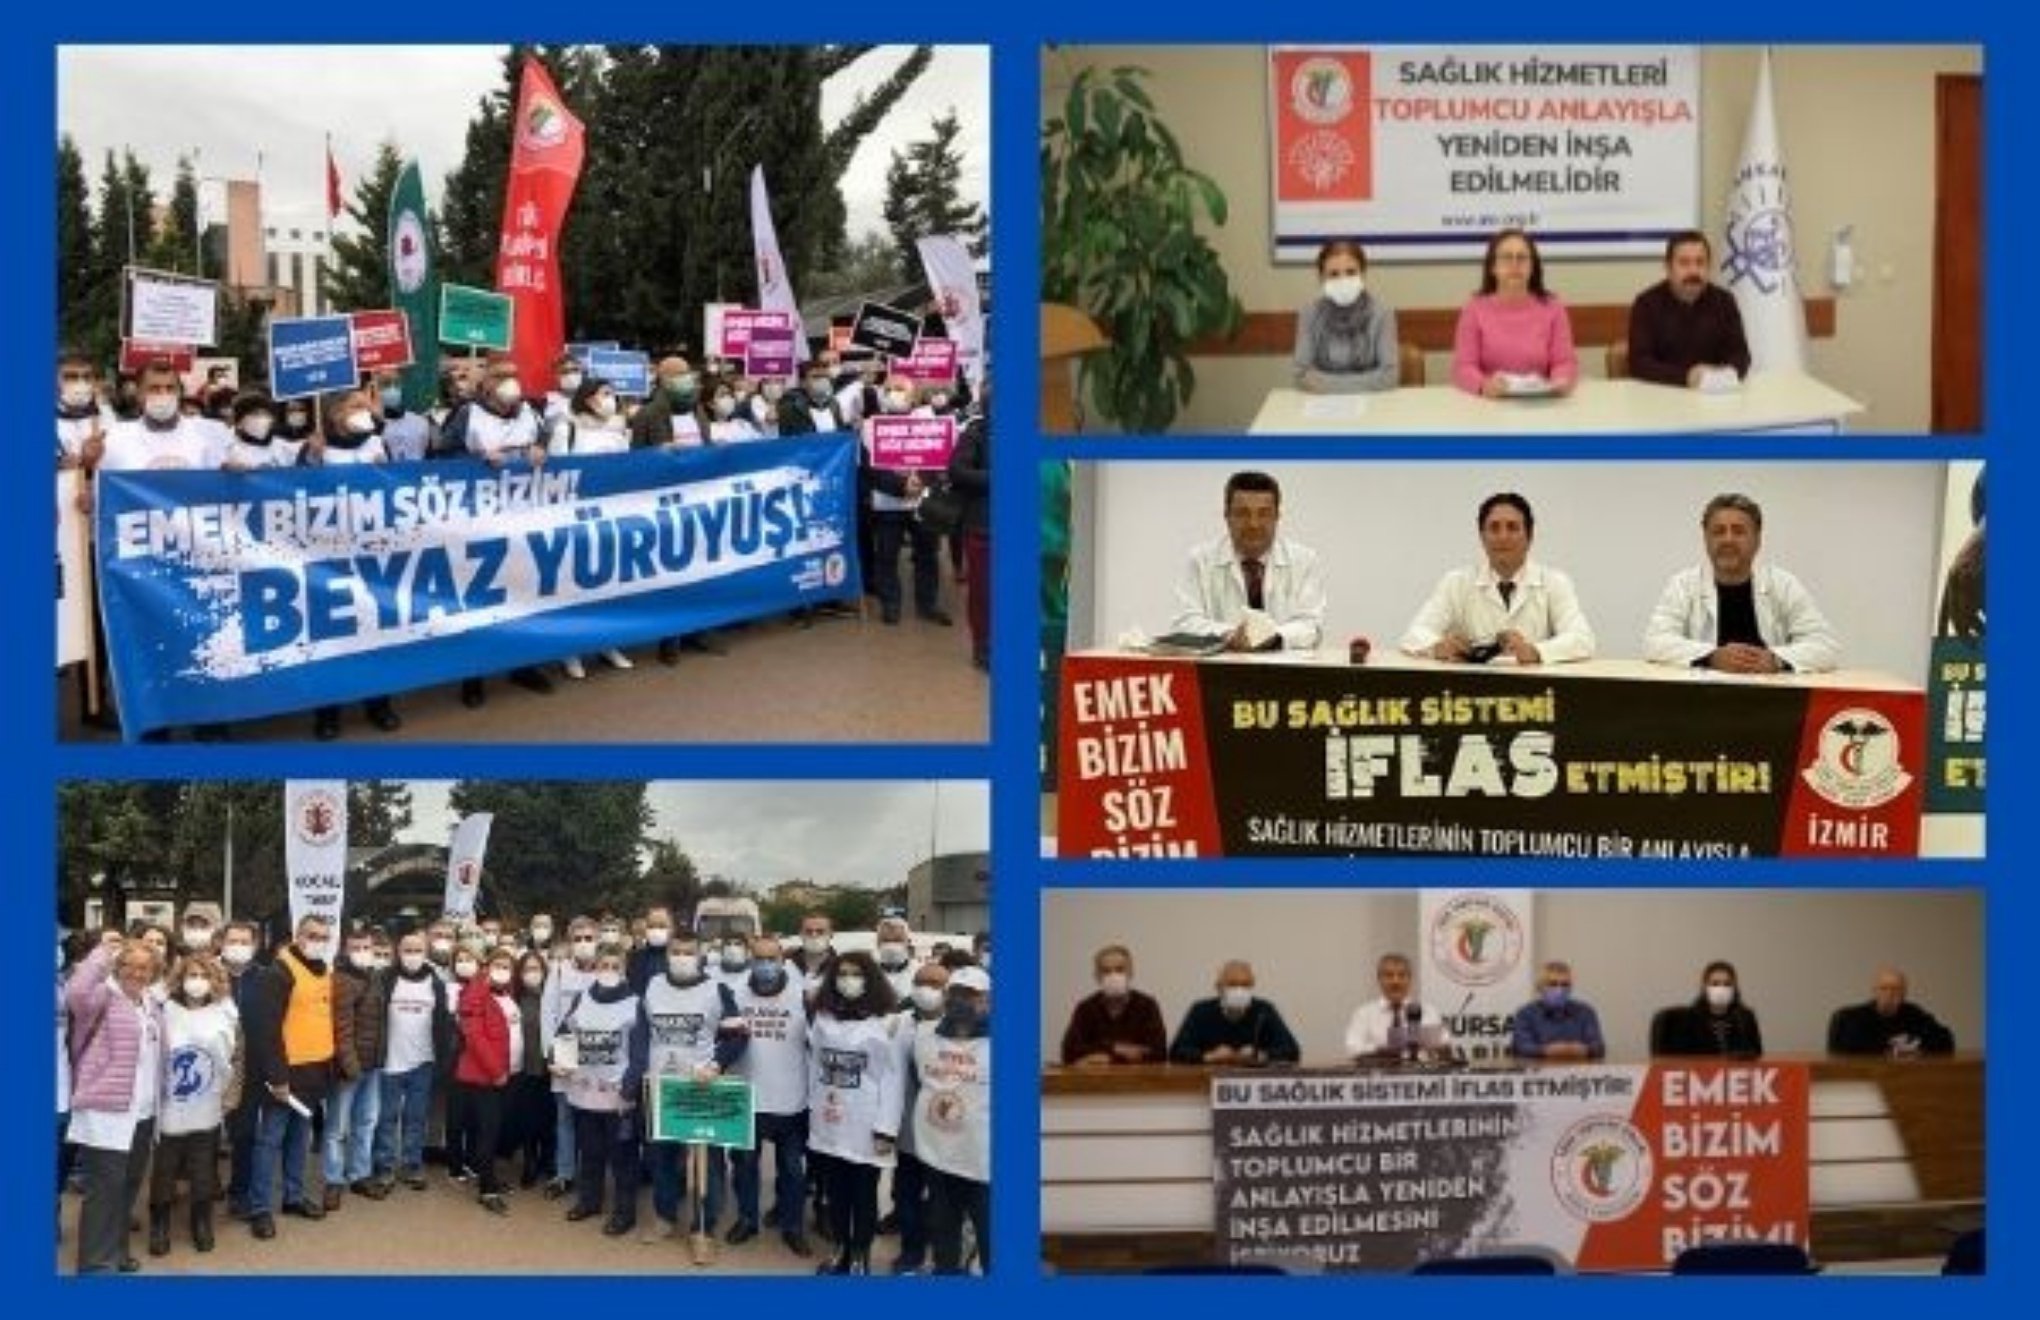 'White March': Turkish Medical Association arrives in Kocaeli